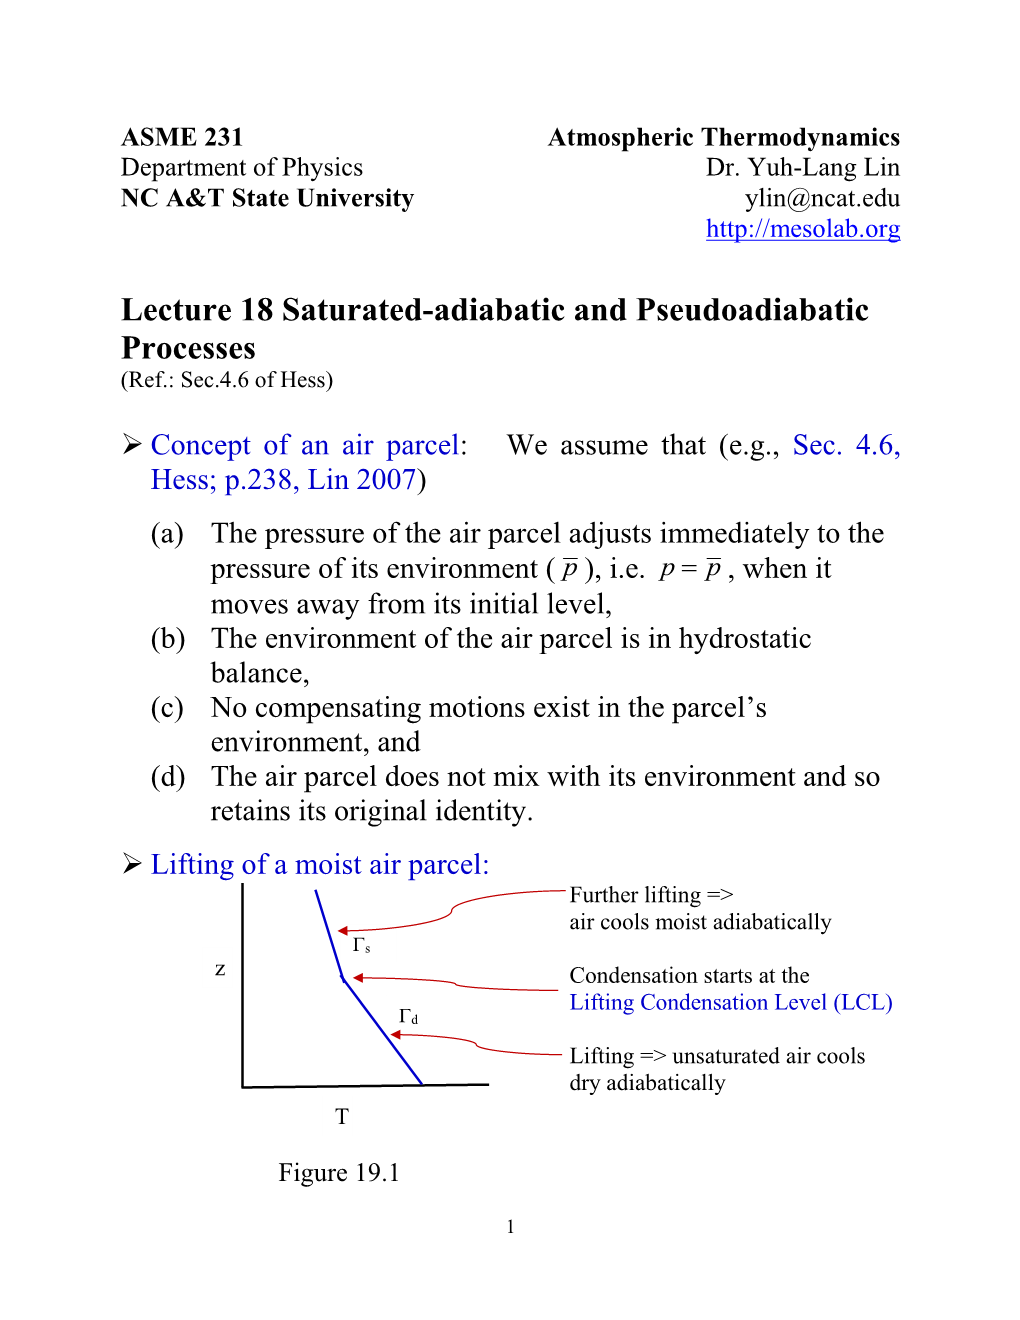 Lecture 18 Saturated-Adiabatic and Pseudoadiabatic Processes (Ref.: Sec.4.6 of Hess)